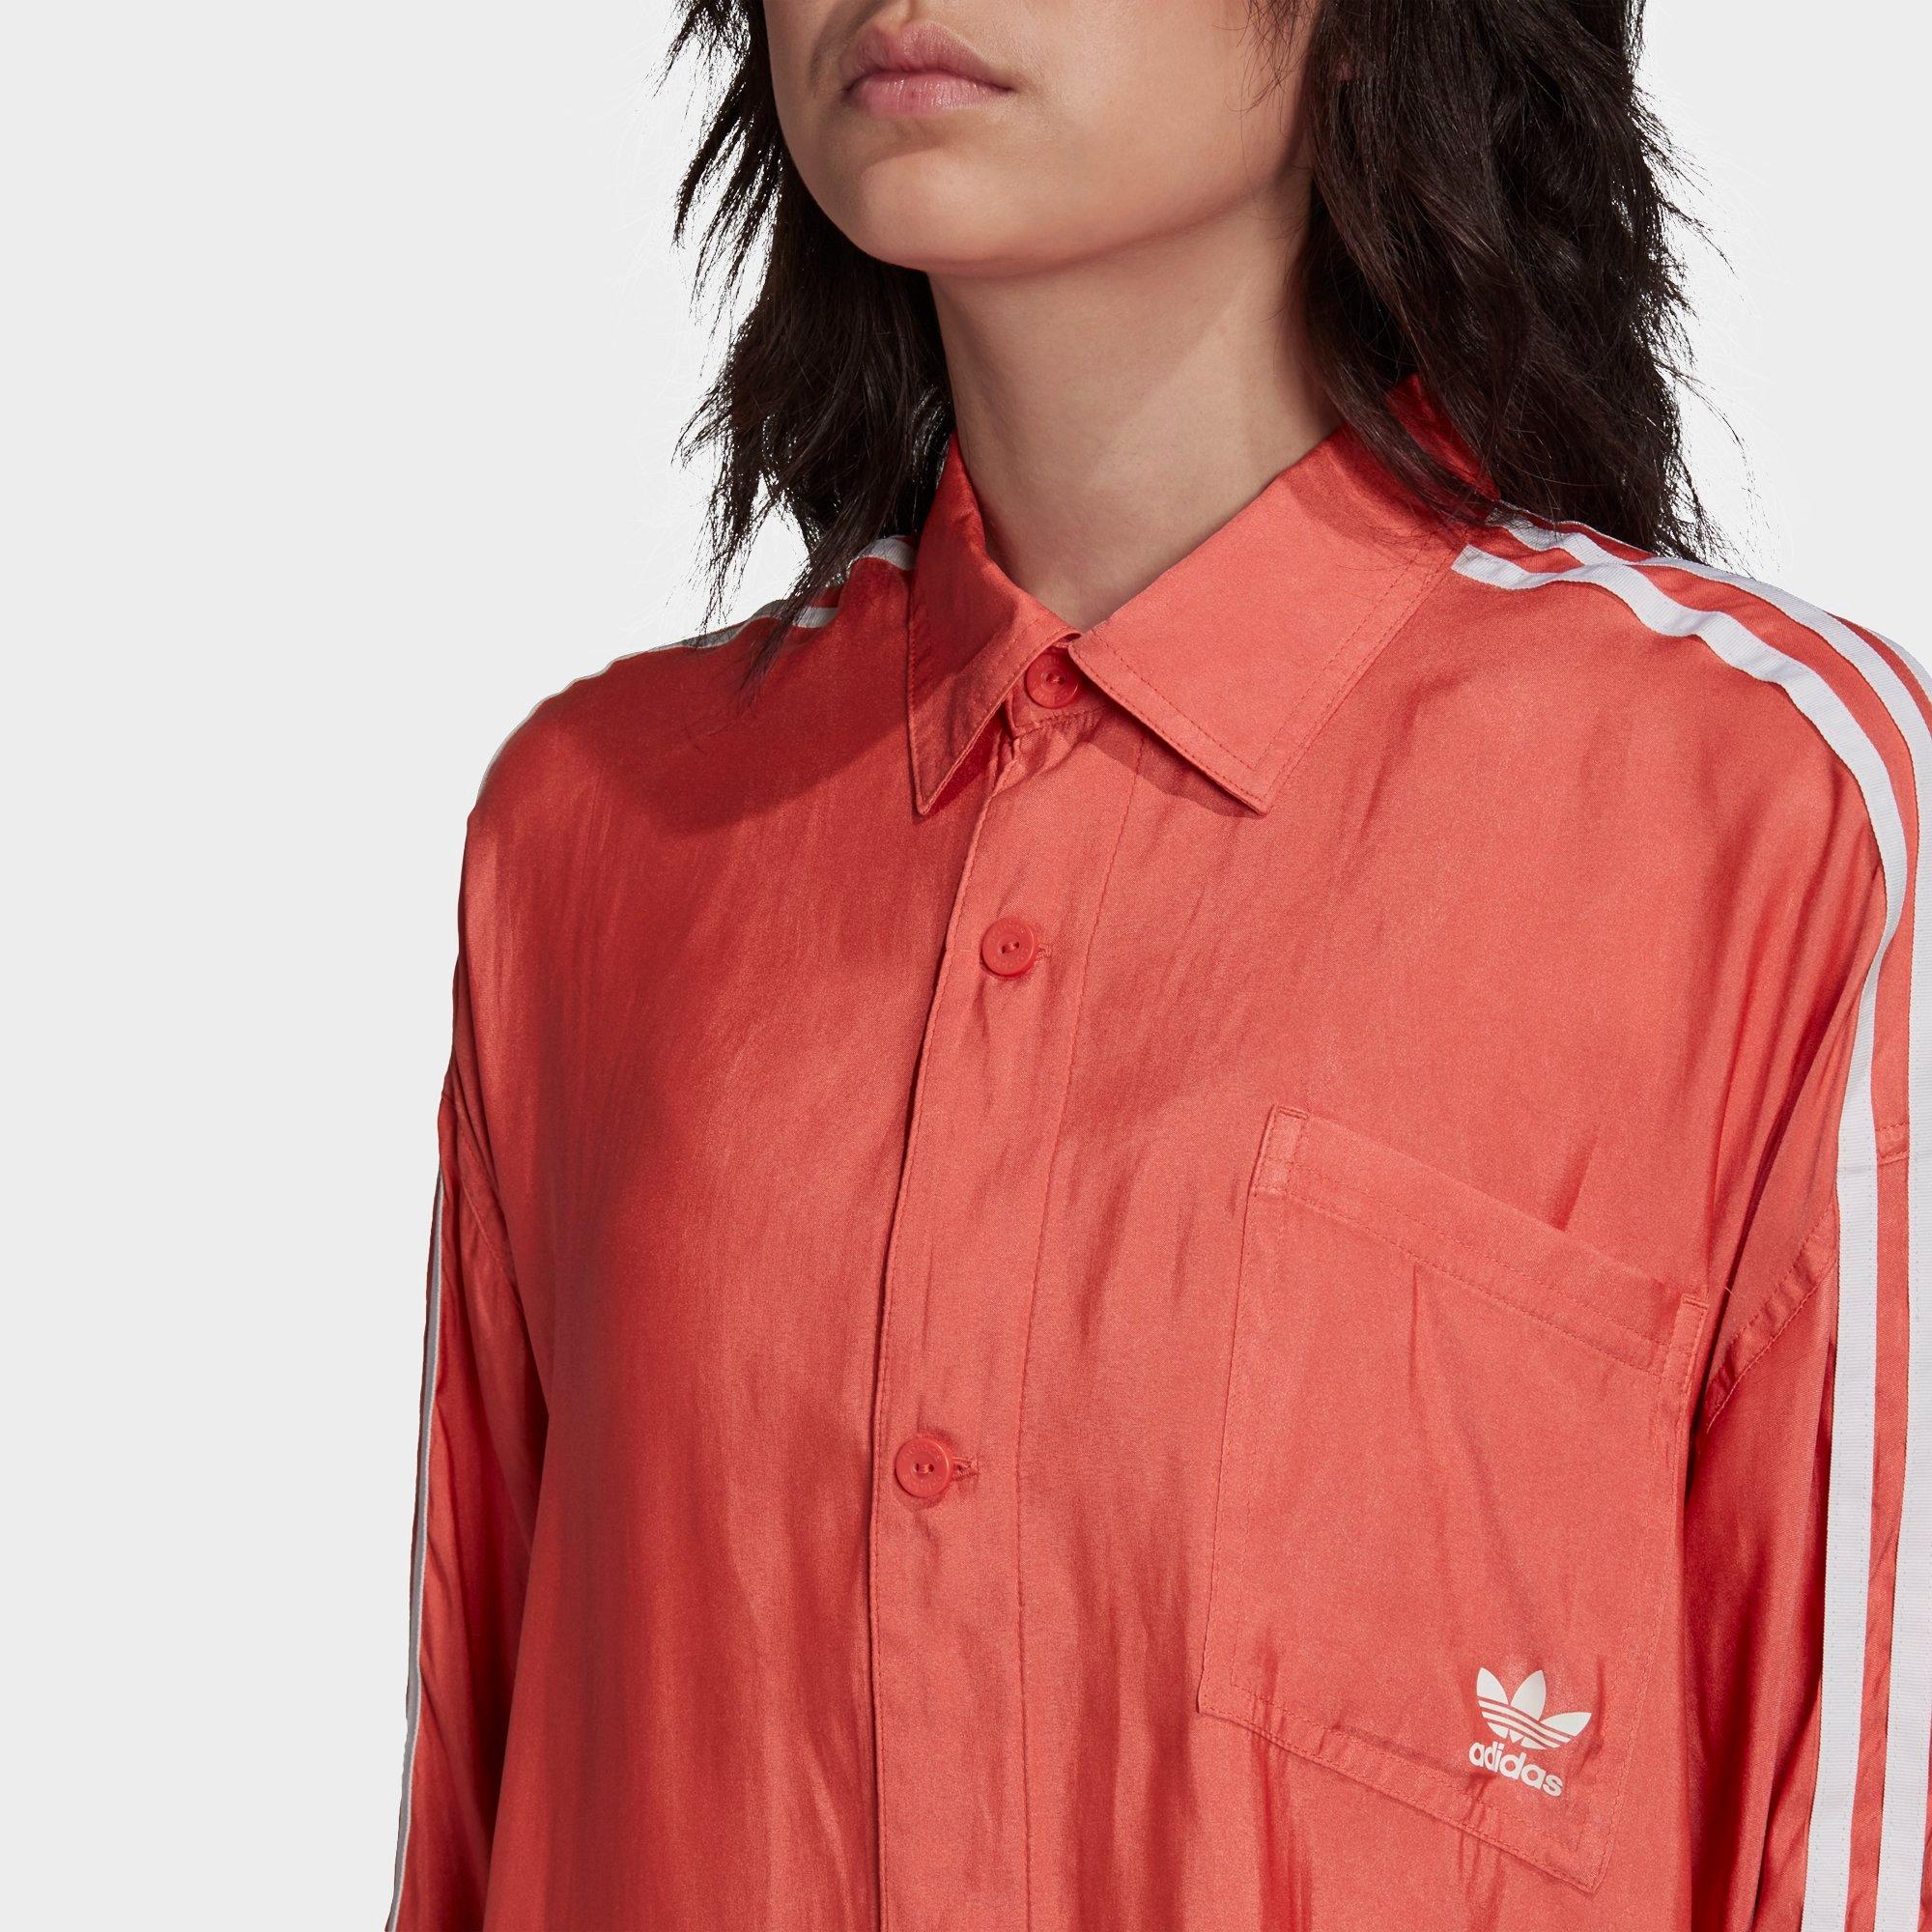 trace scarlet adidas shirt